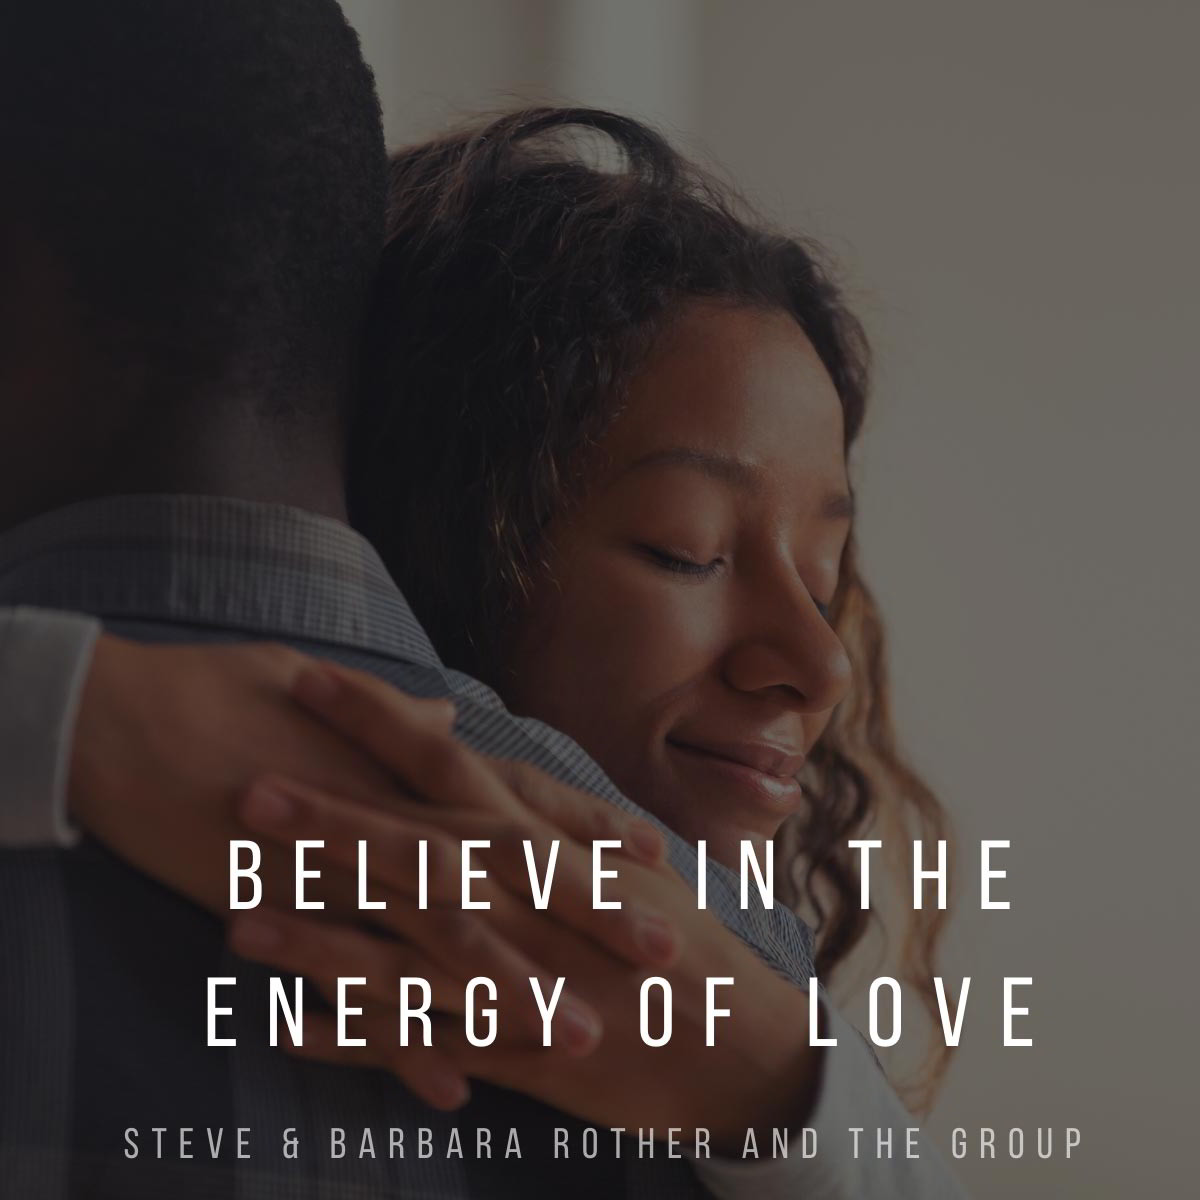 Believe in the energy of love